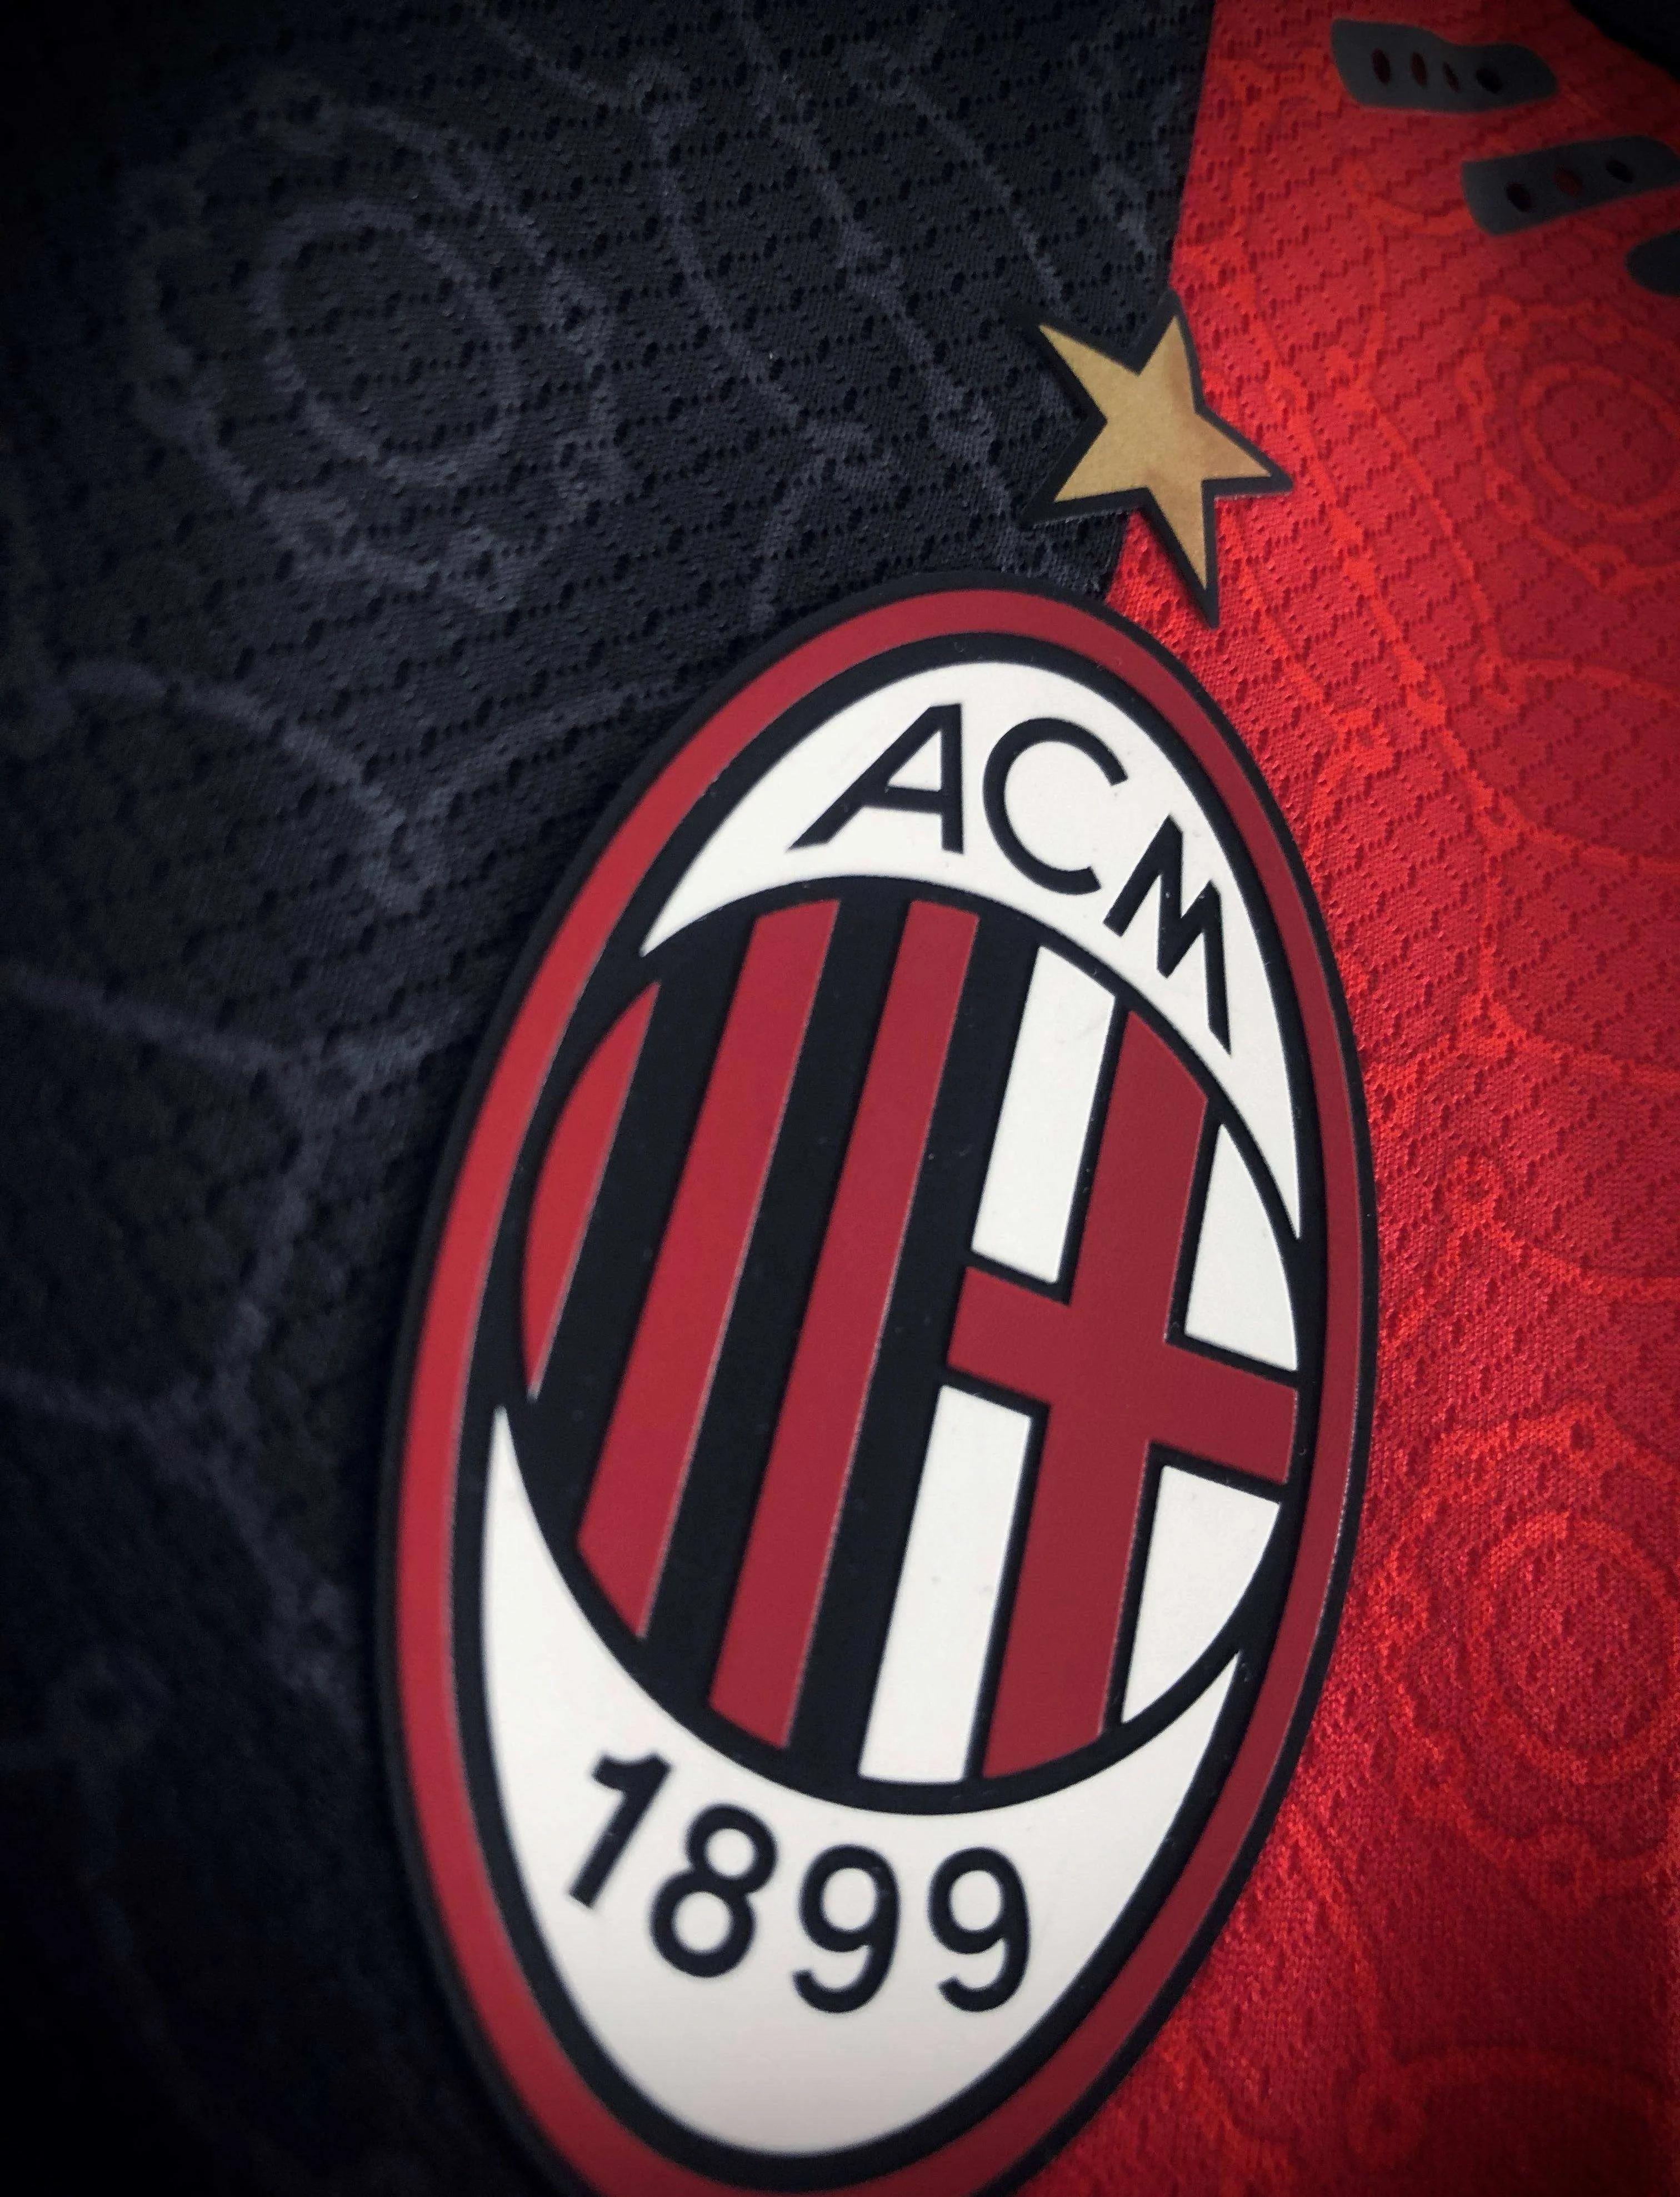 AC米兰官方海报送生日祝福「Froza Milan,生日快乐,AC米兰」